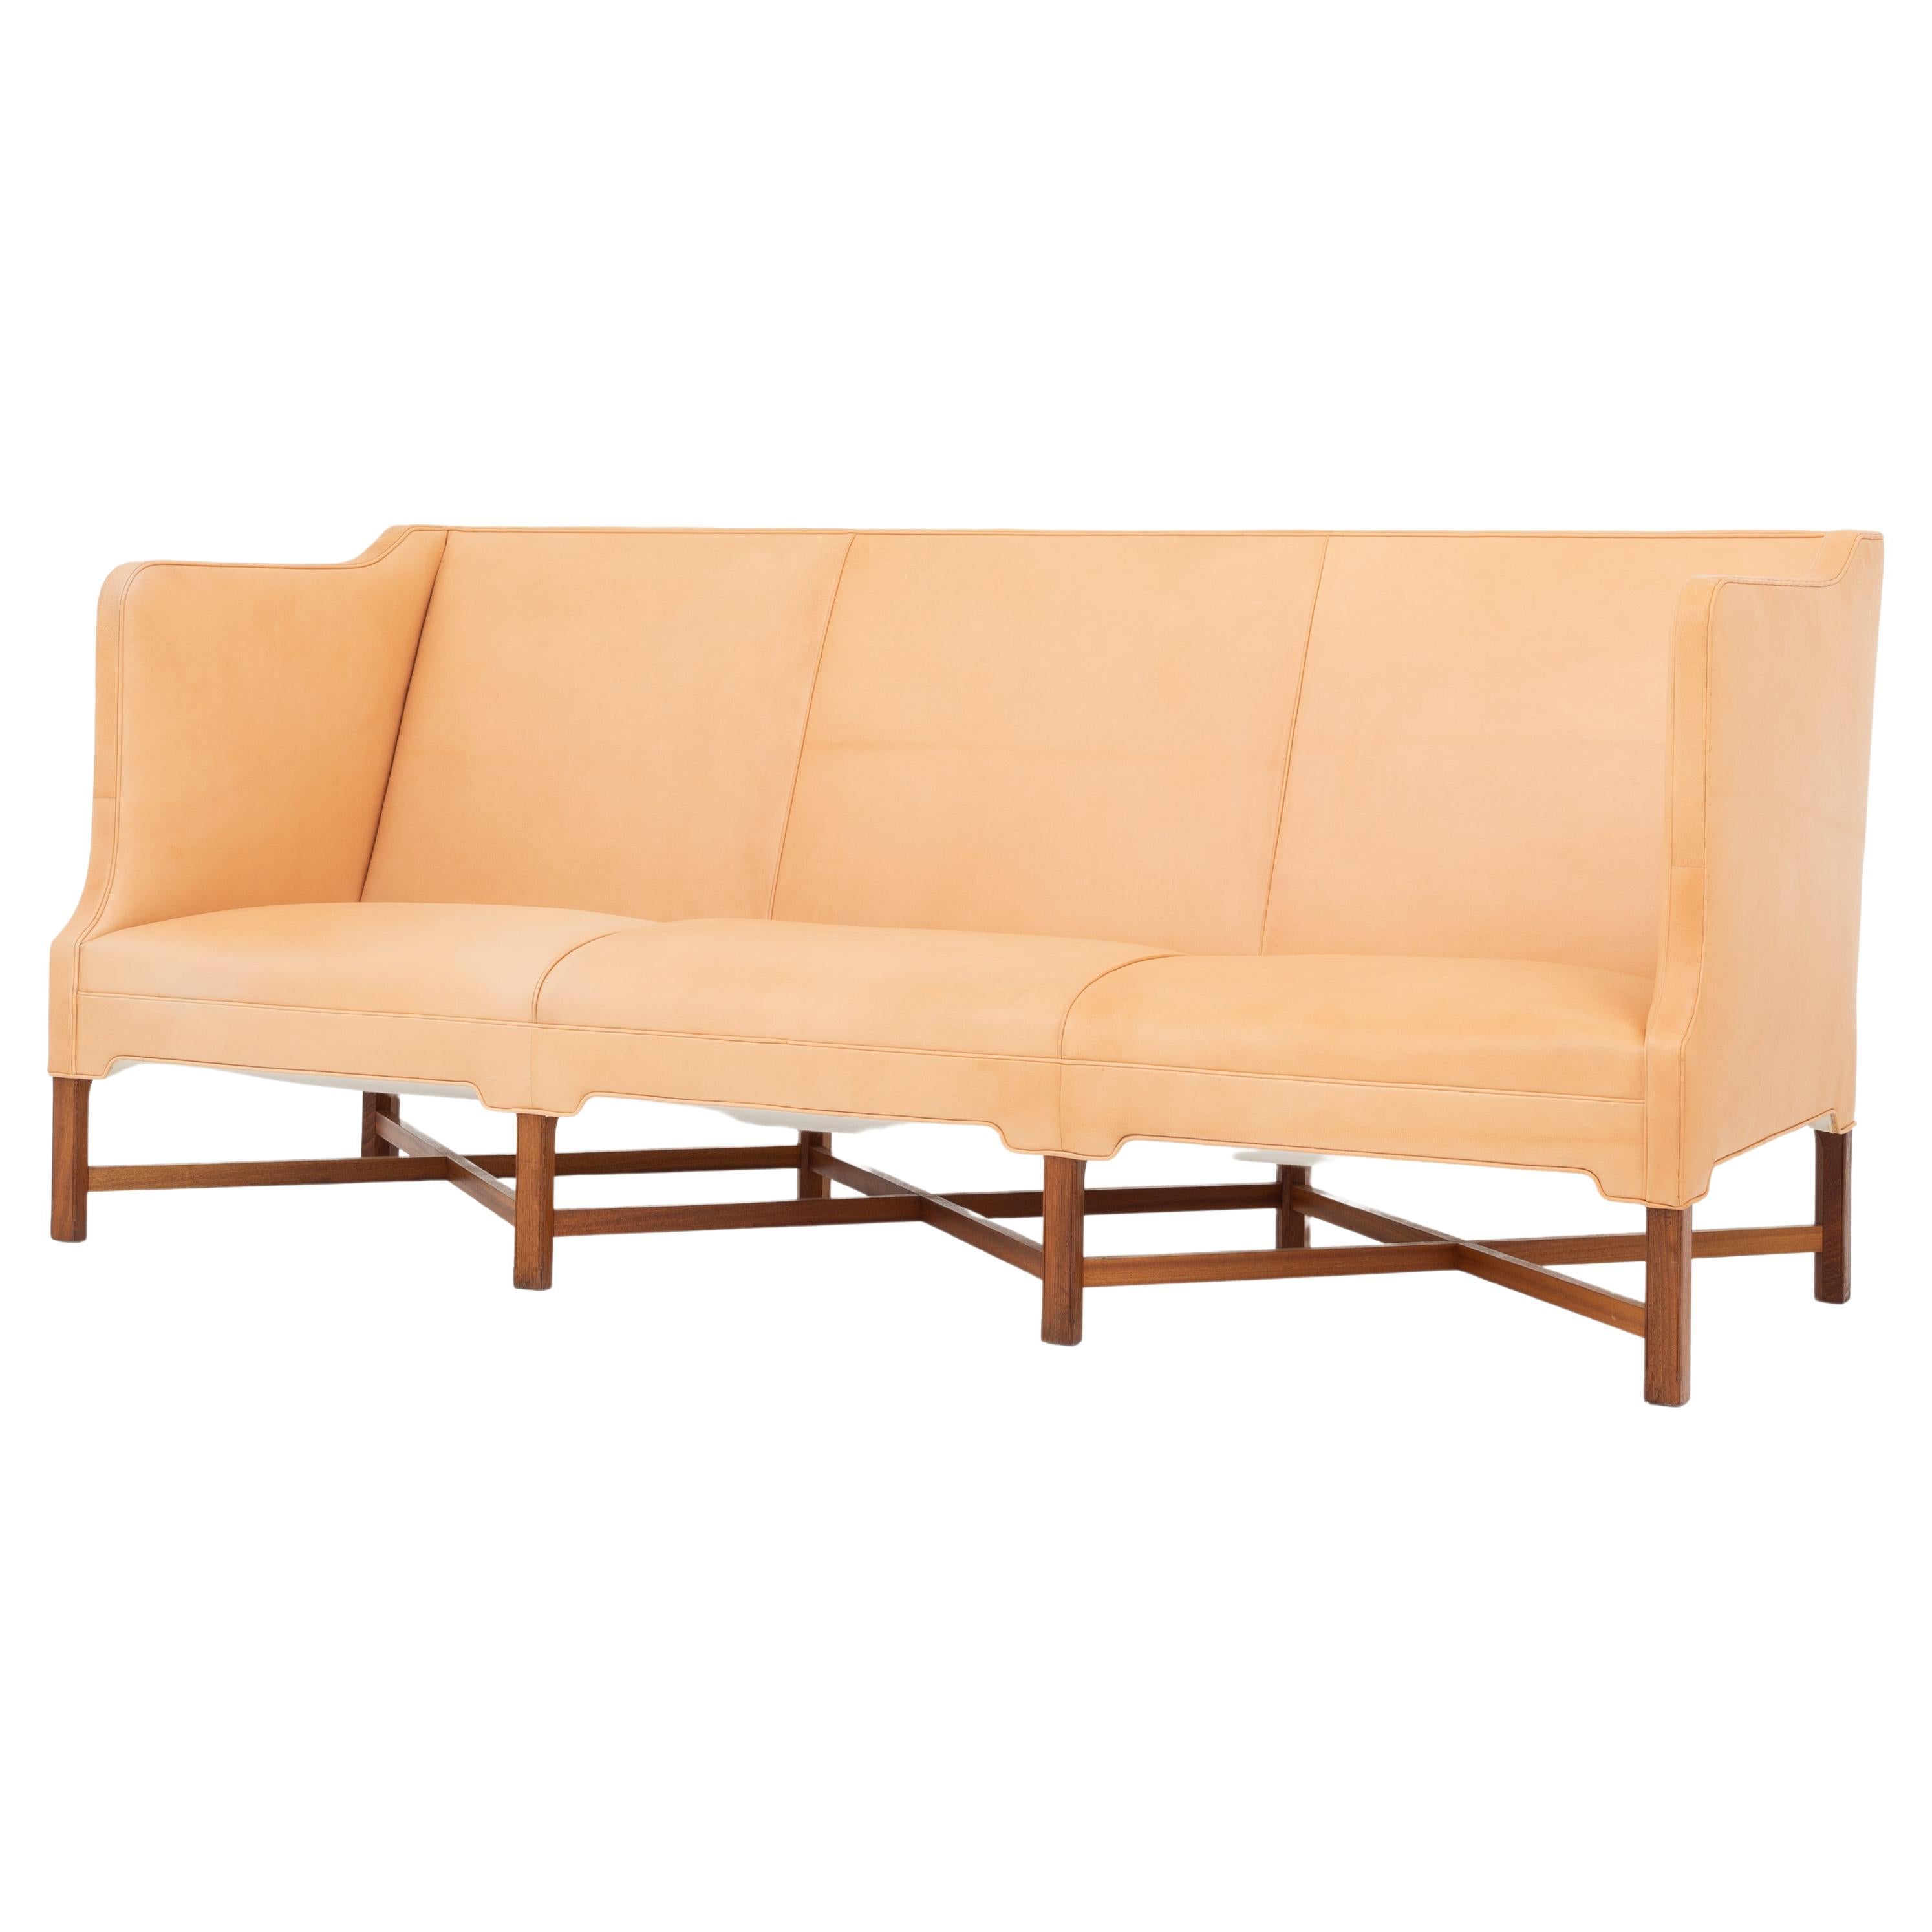 KK 4118 3-Seat Sofa in Niger Leather by Kaare Klint